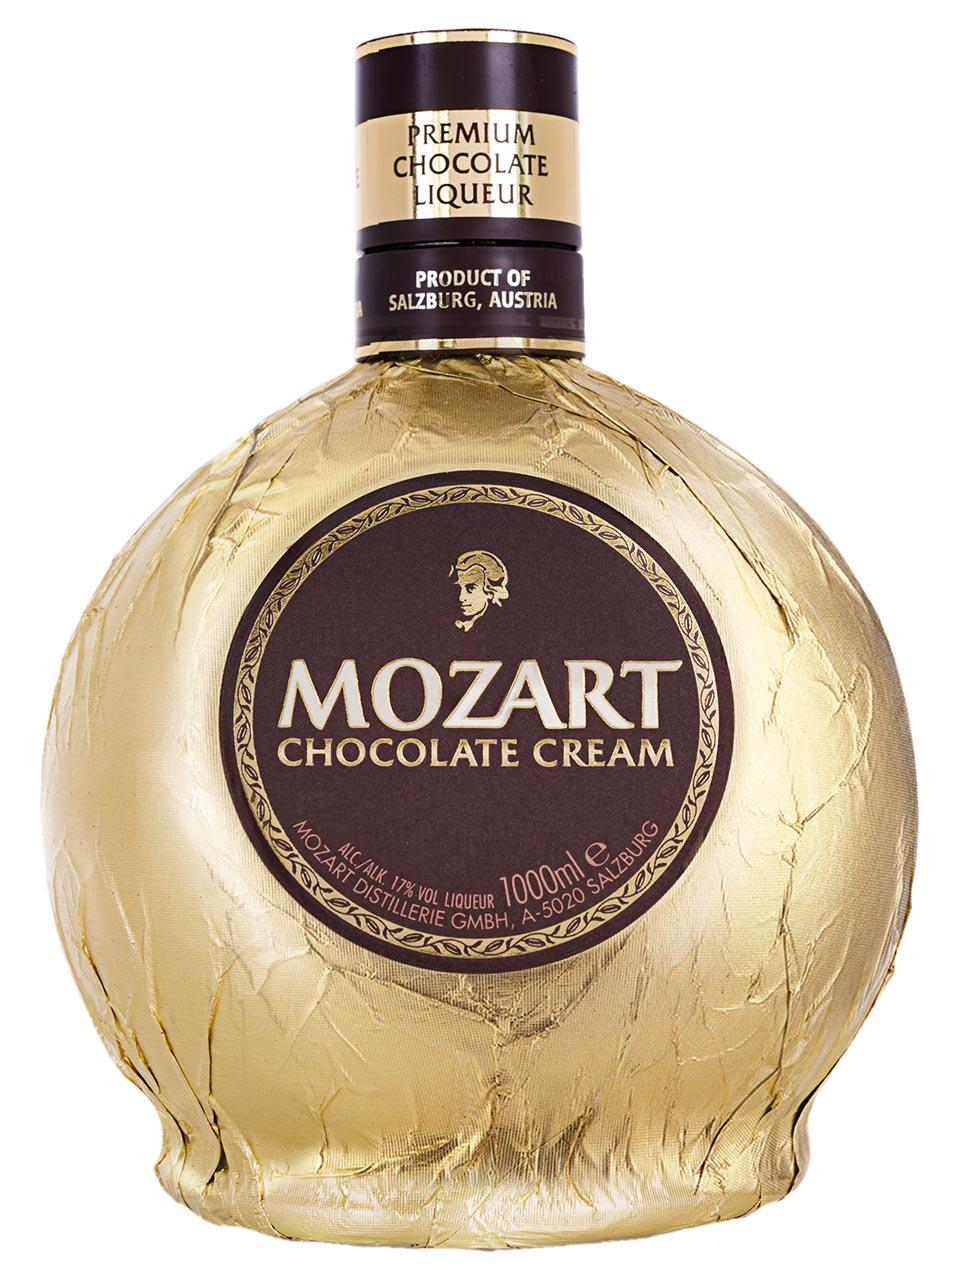 Mozart Chocolate Cream 17% 1L | Shopping Frankfurt Airport Likör Online